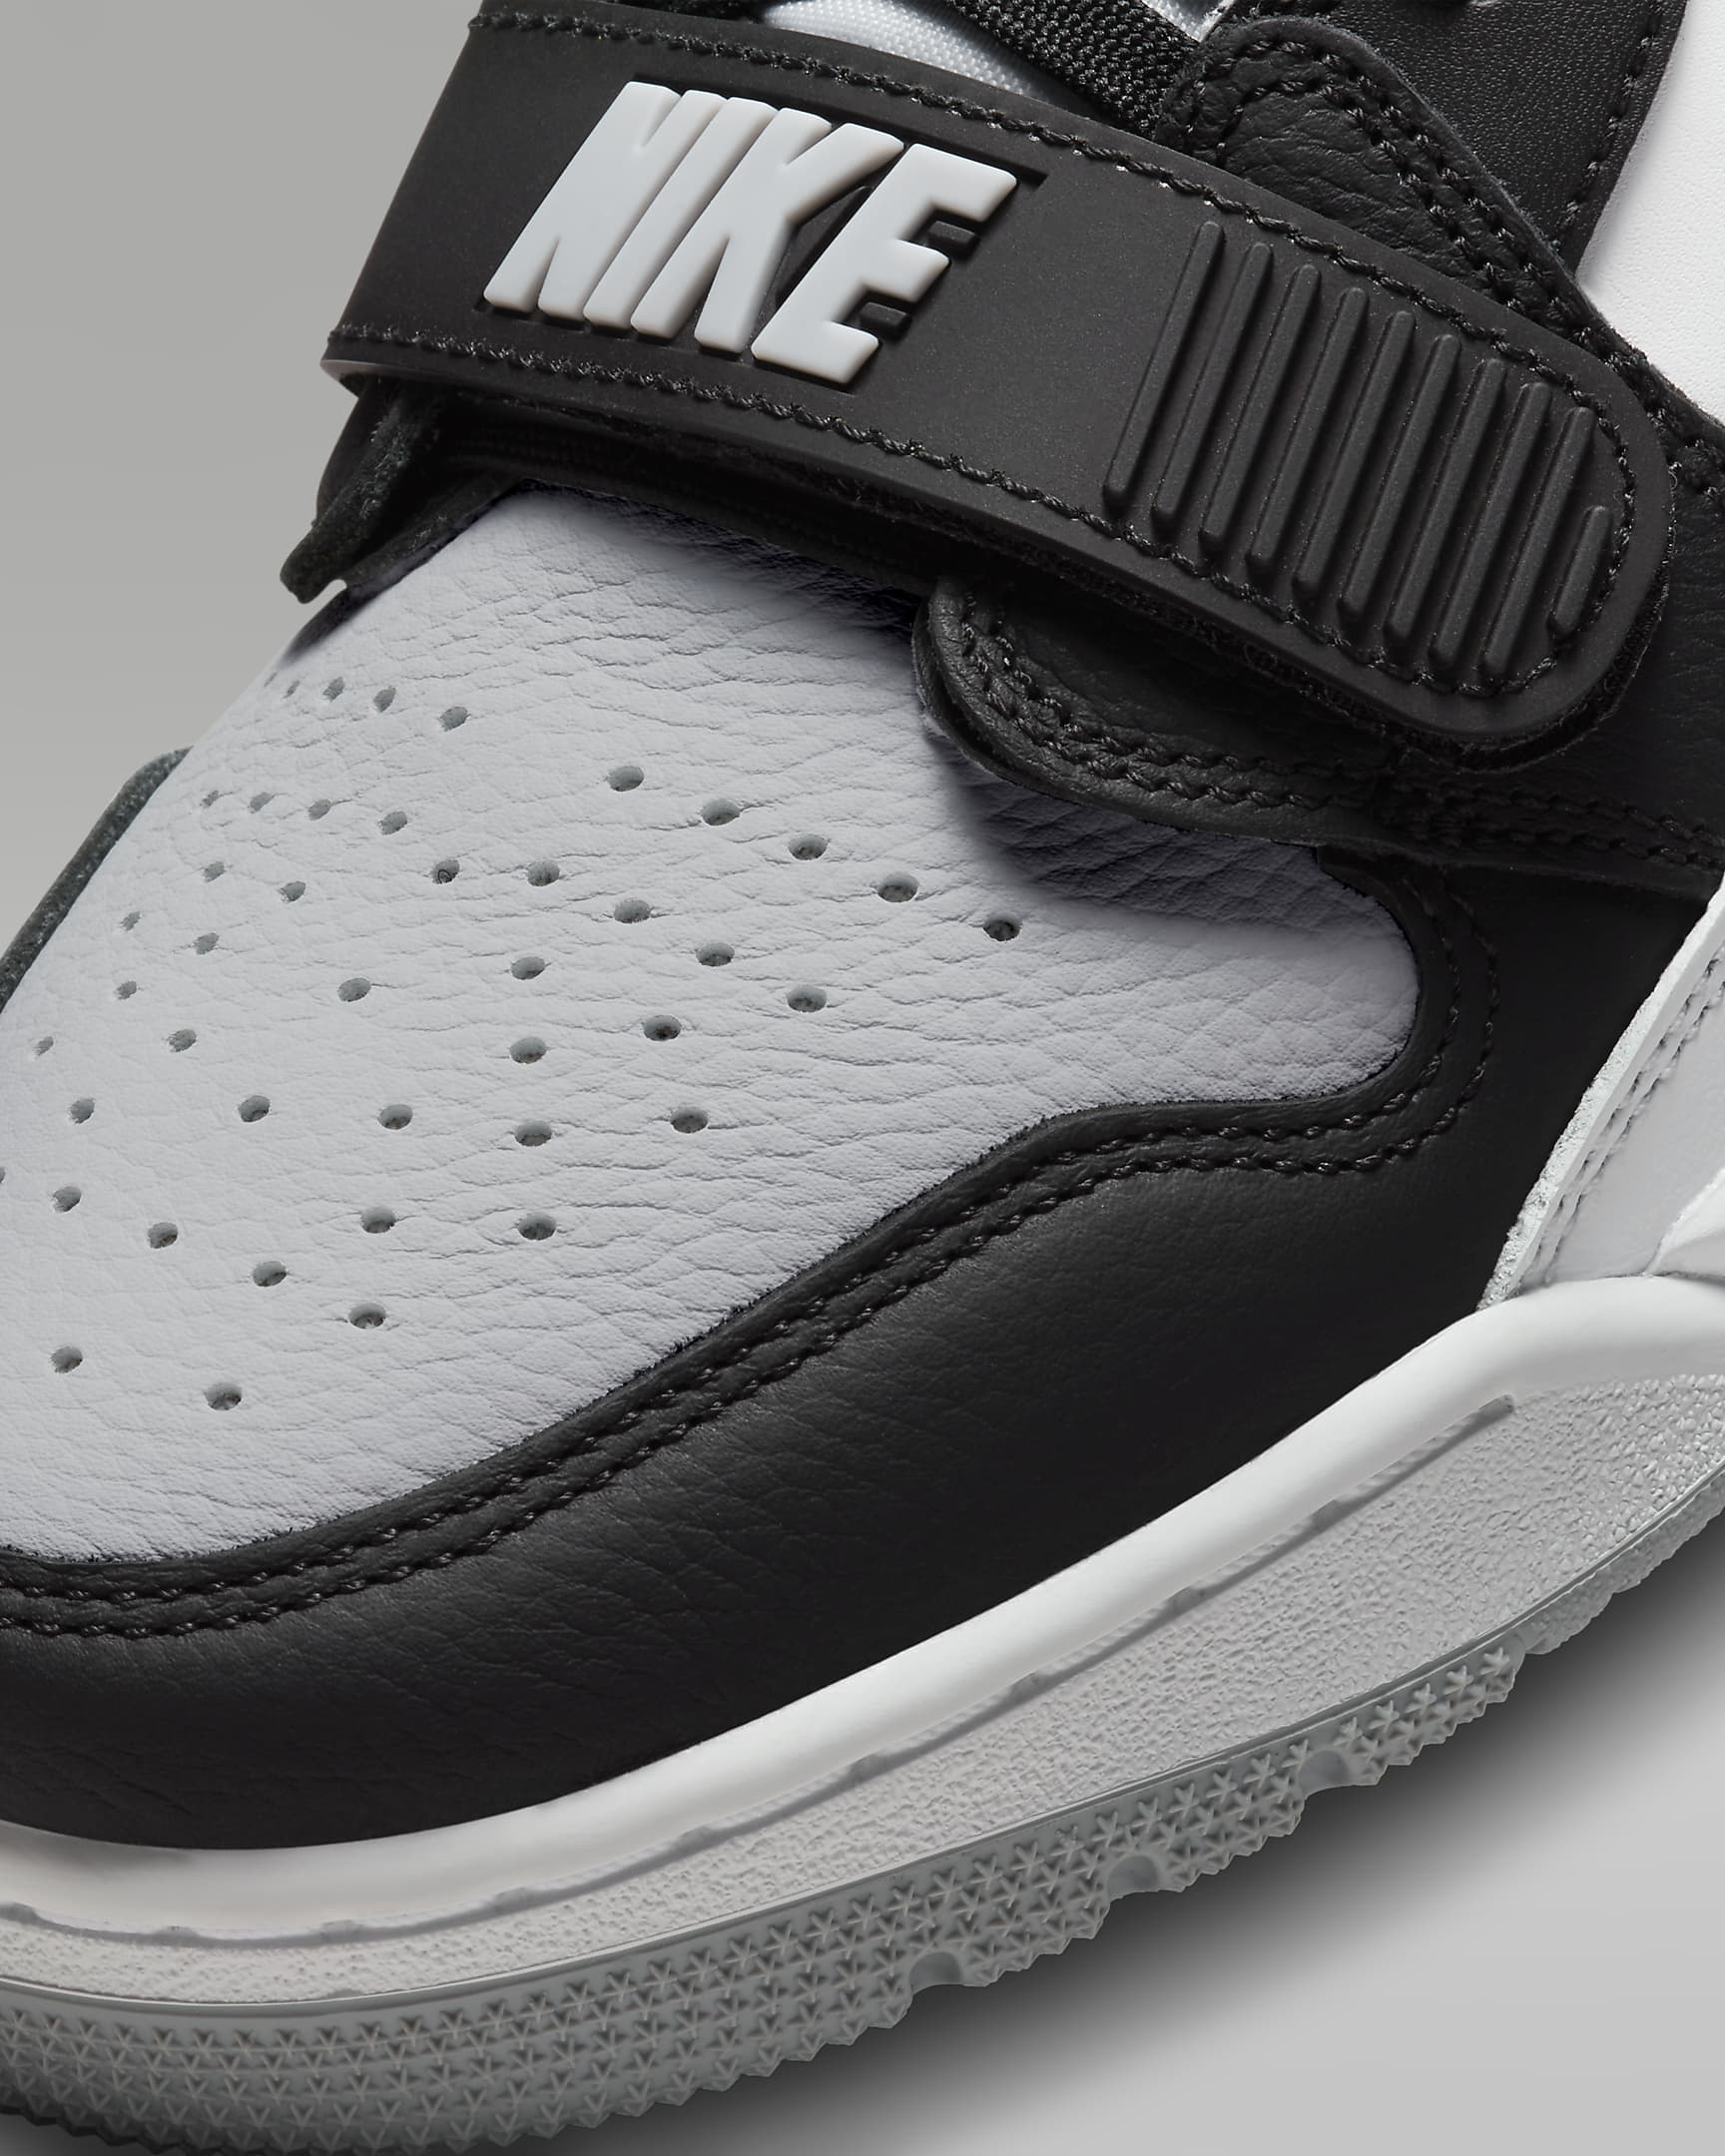 Air Jordan Legacy 312 Low Men's Shoes - White/Wolf Grey/Black